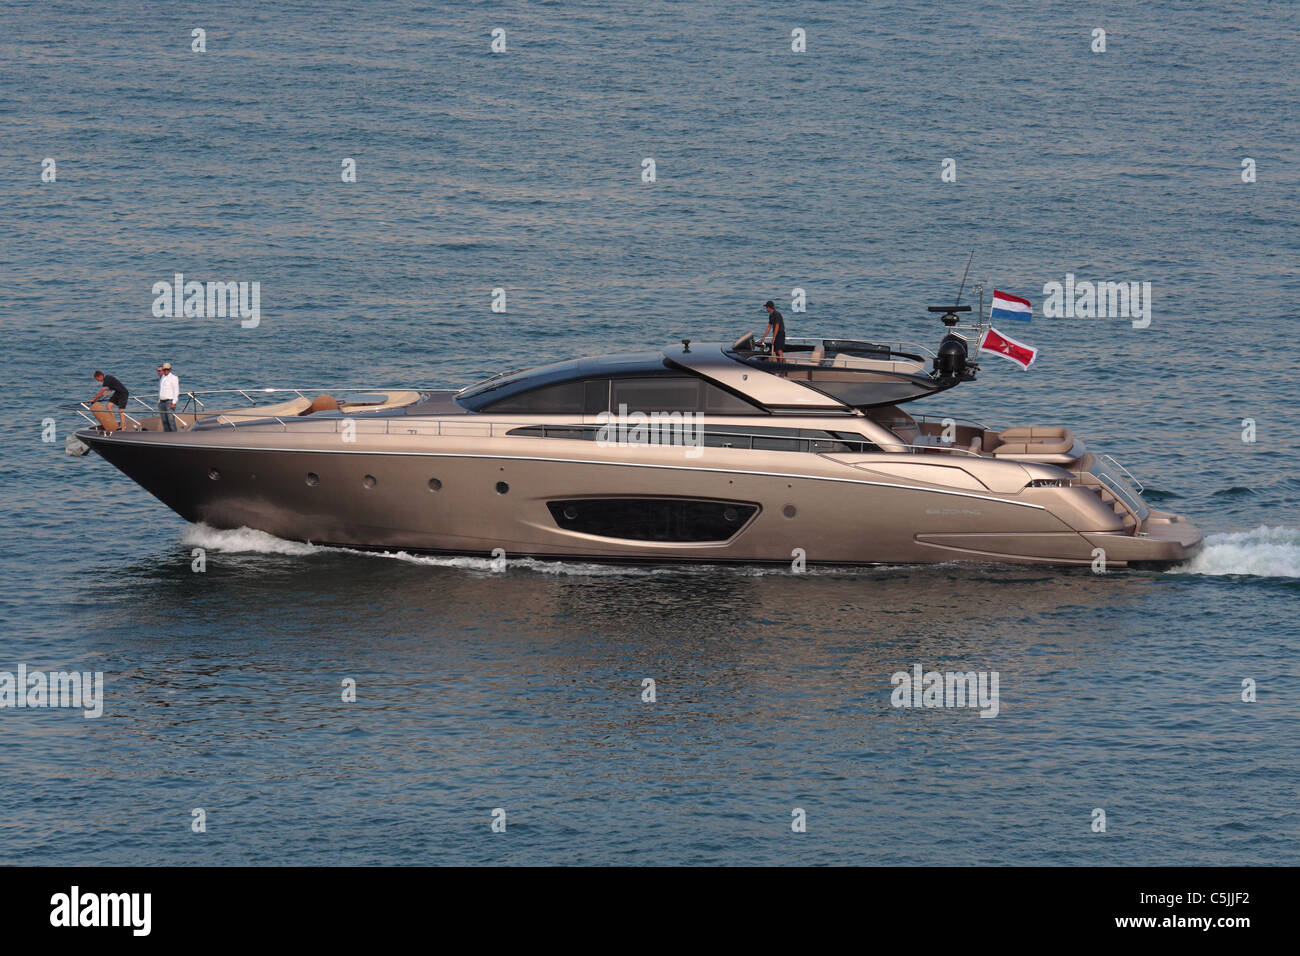 Riva Domino 86 large luxury motor yacht. Wealthy lifestyle. Stock Photo